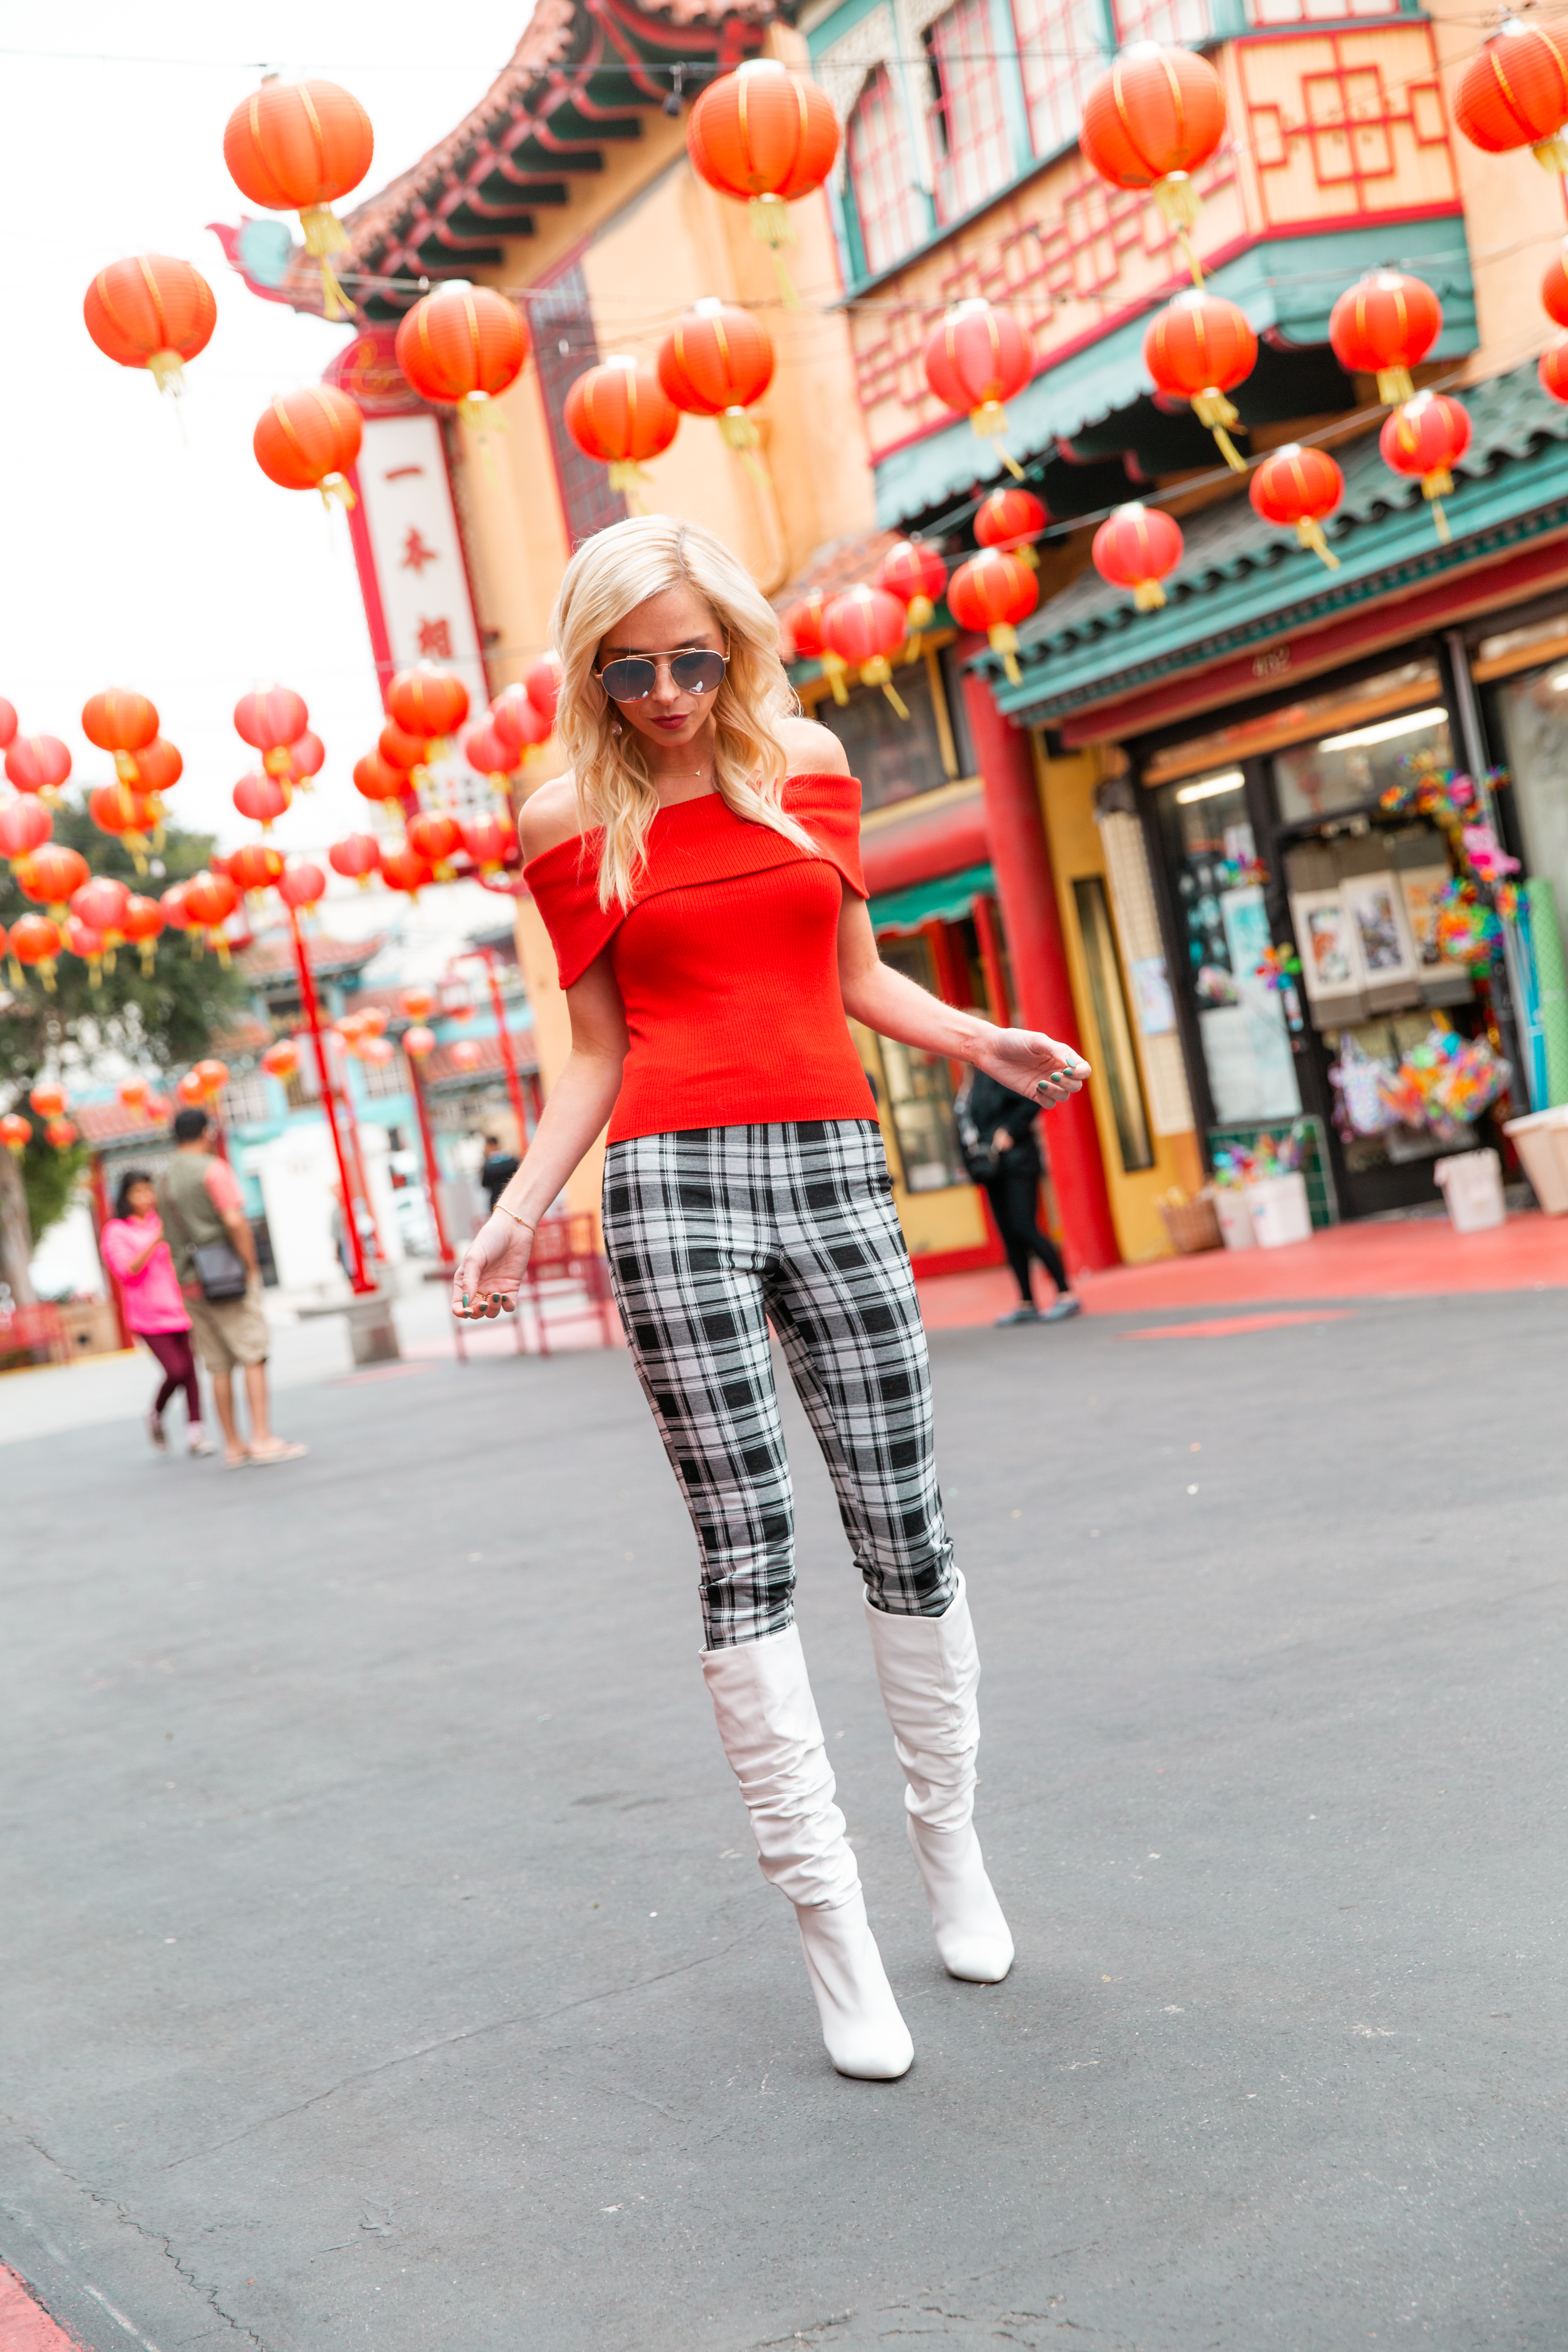 Chinatown Visit with a Retro Twist